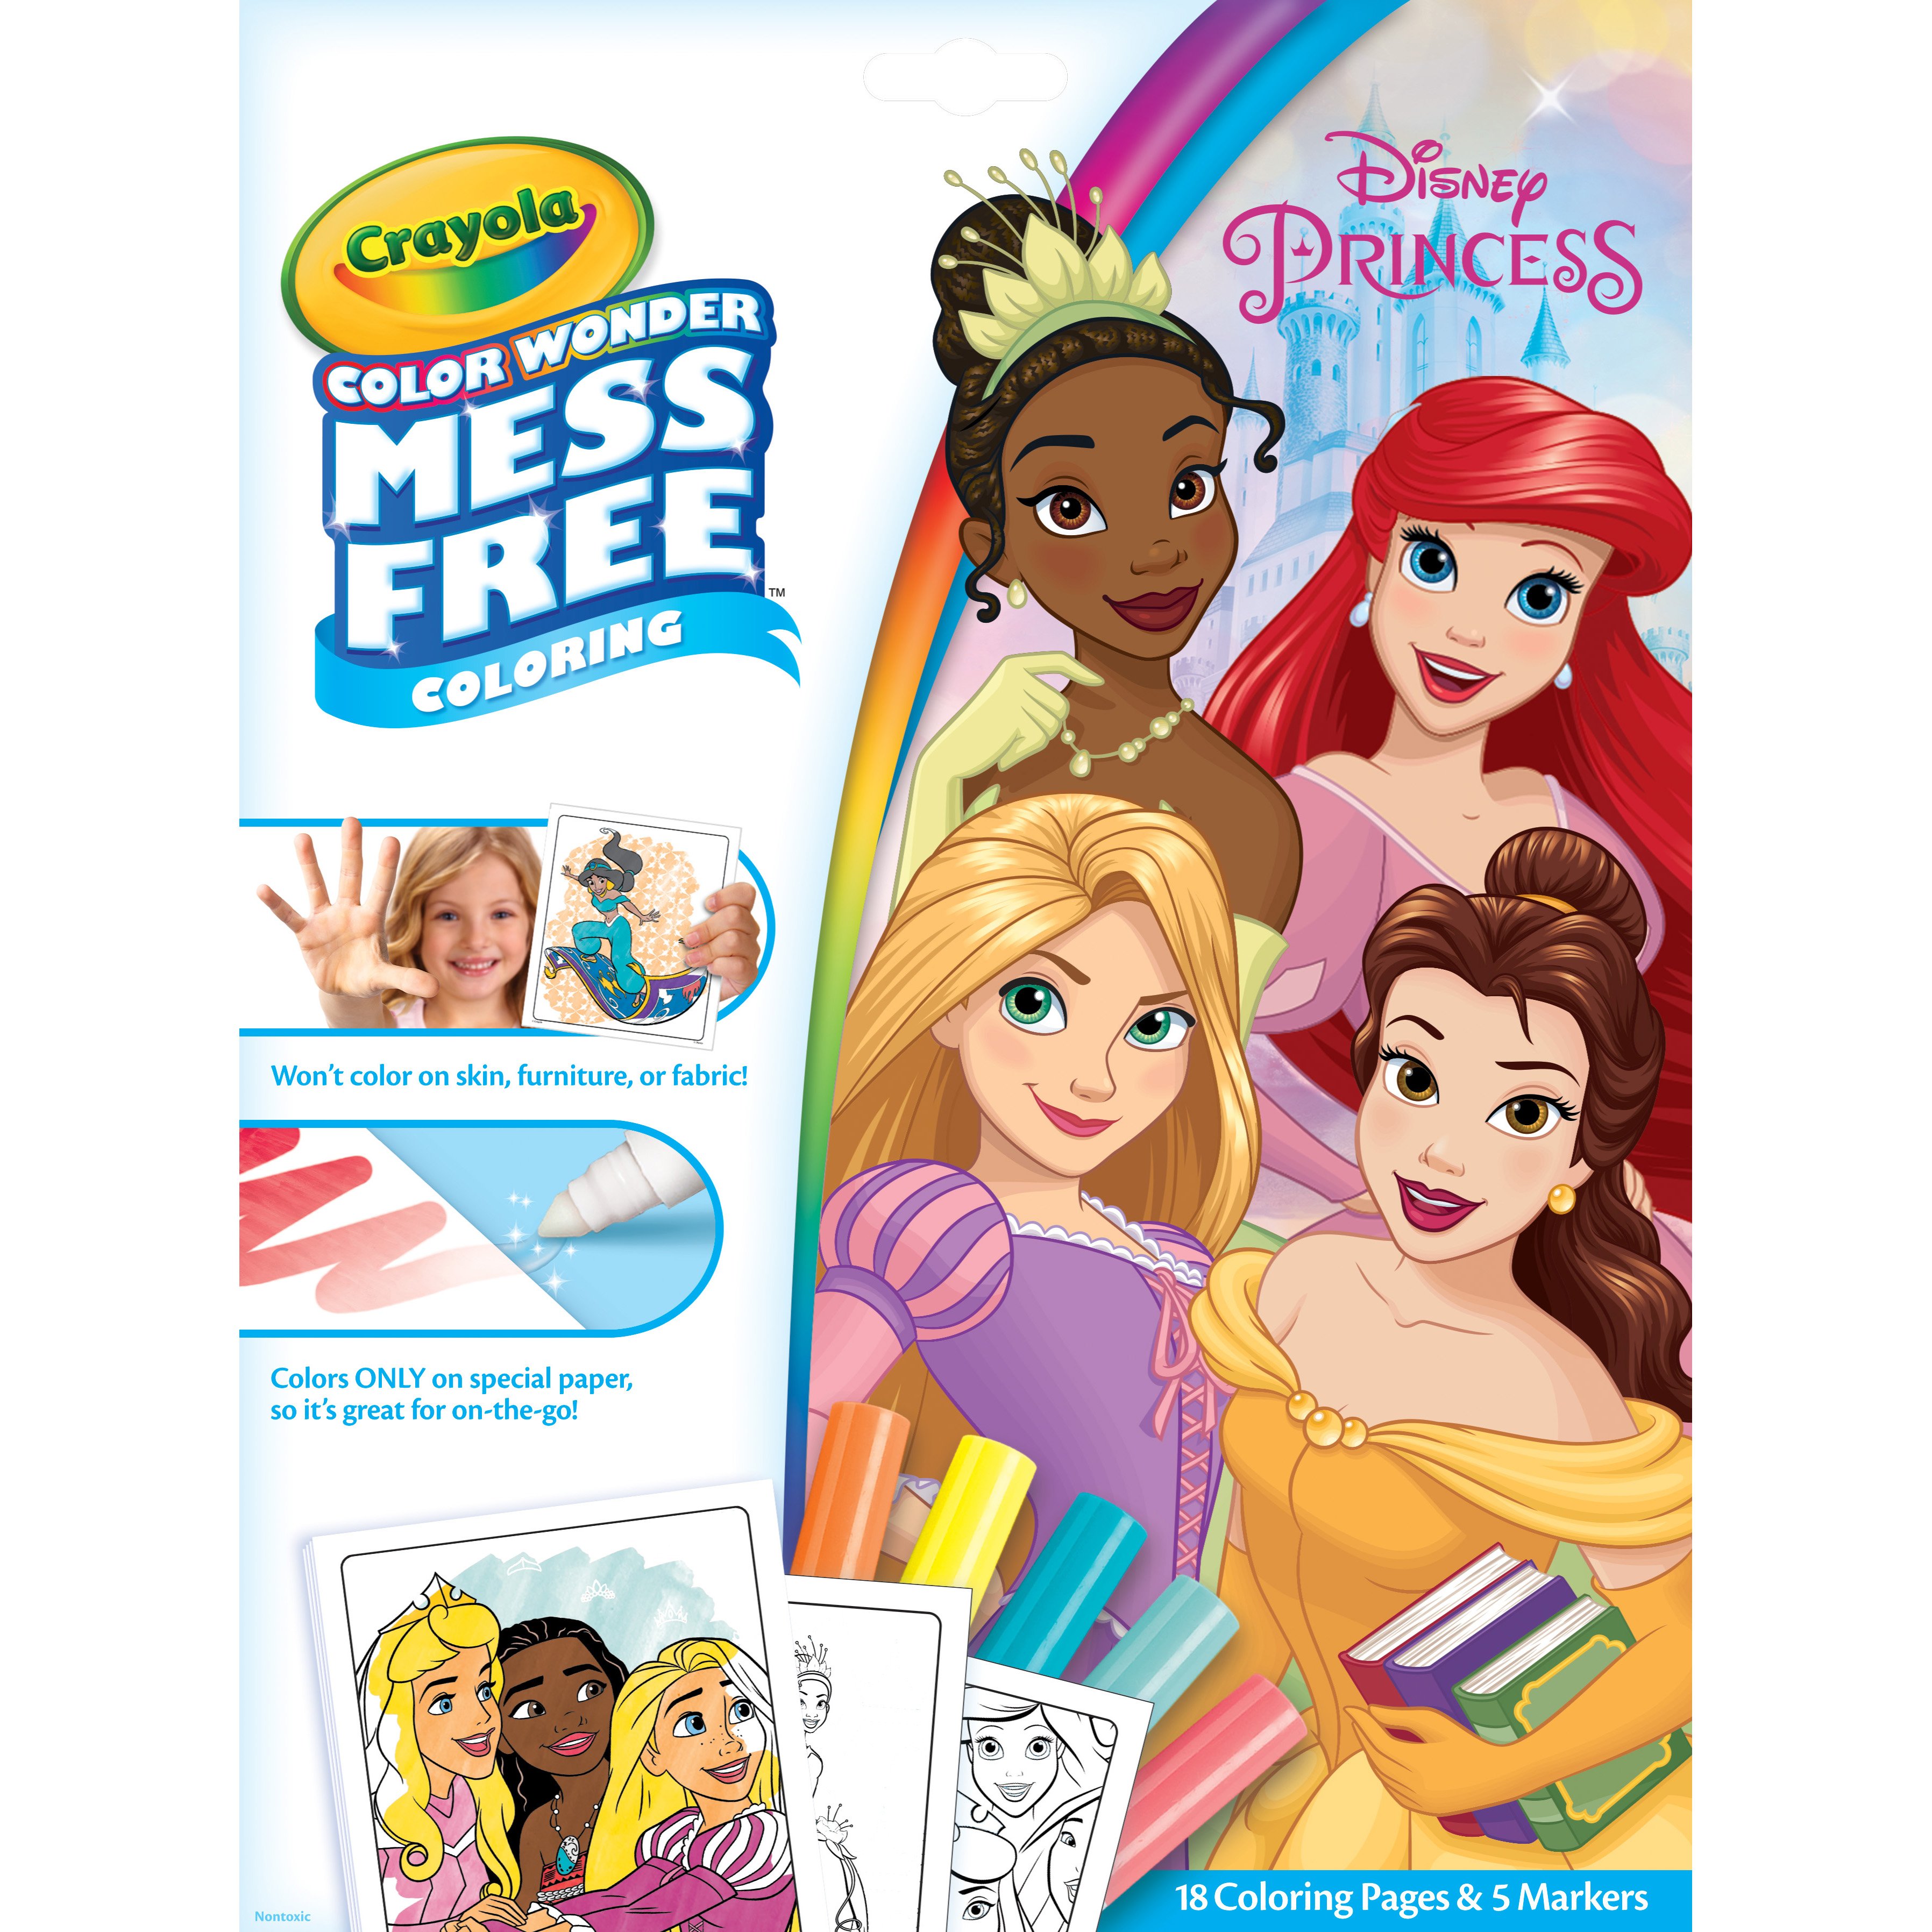 Crayola Color Wonder Mess Free Coloring Kit - Disney Princess